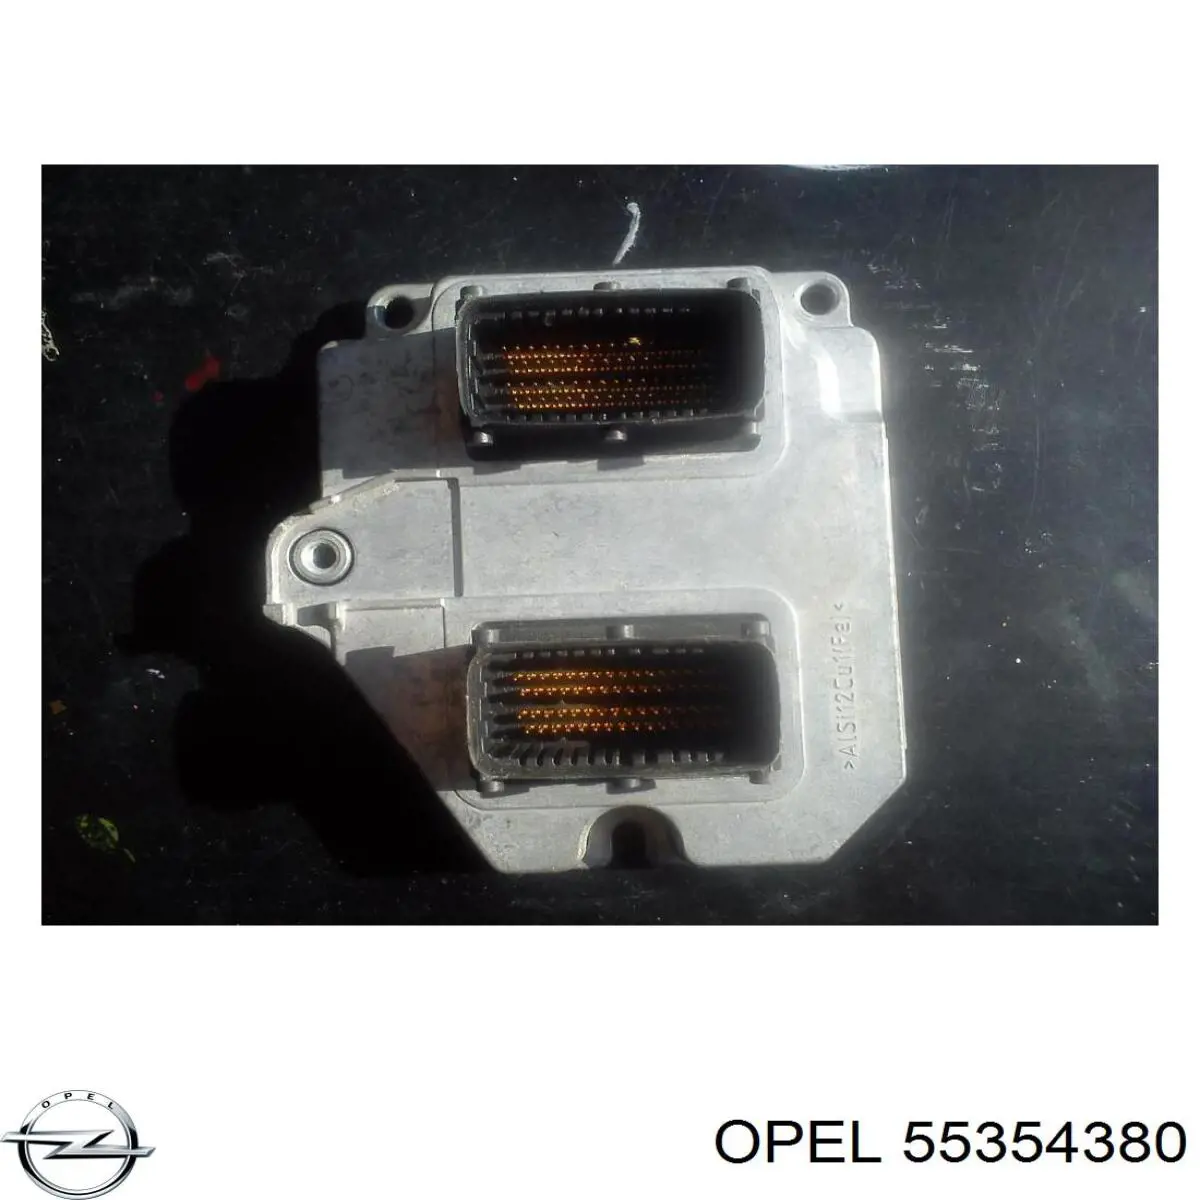 6235325 Opel módulo de control del motor (ecu)